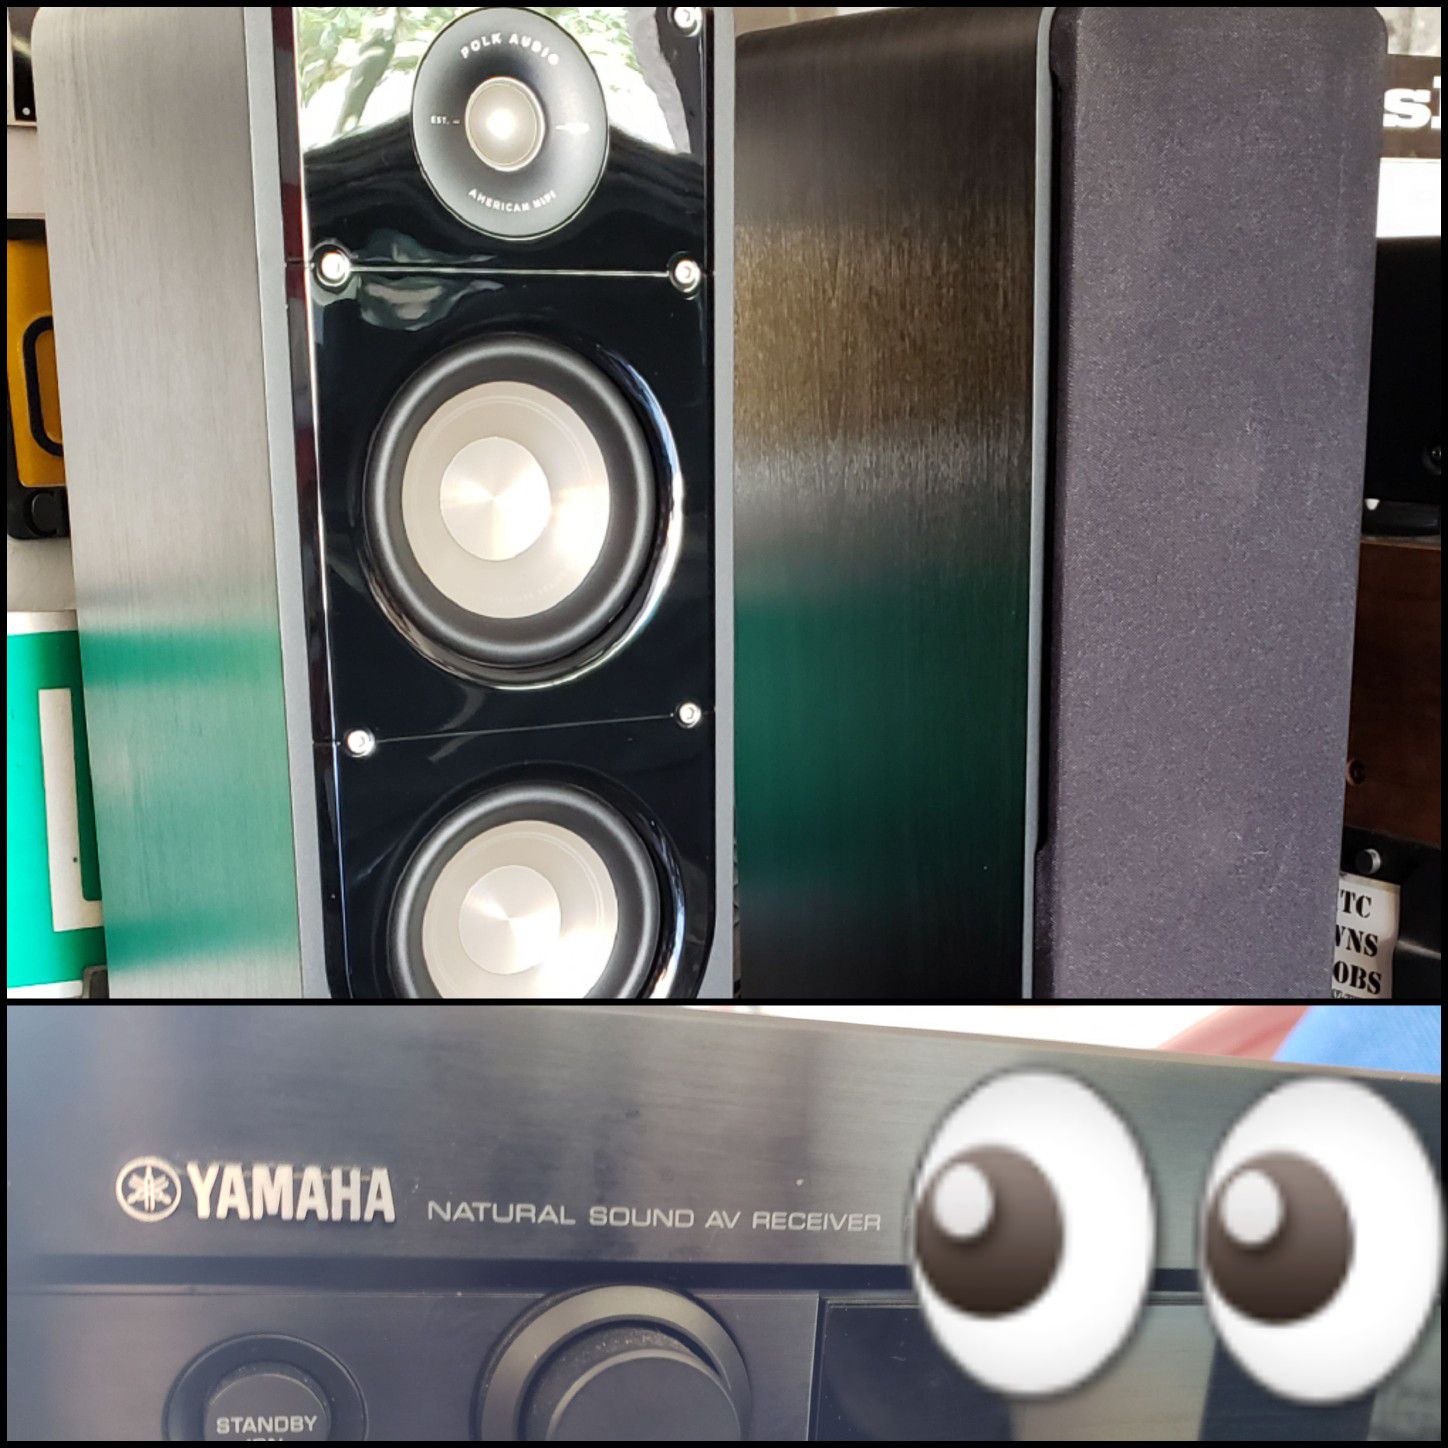 NEW POLK AUDIO SIGNATURE S50 SPEAKERS & YAMAHA RX-V1300 SURROUND SOUND AMPLIFIER